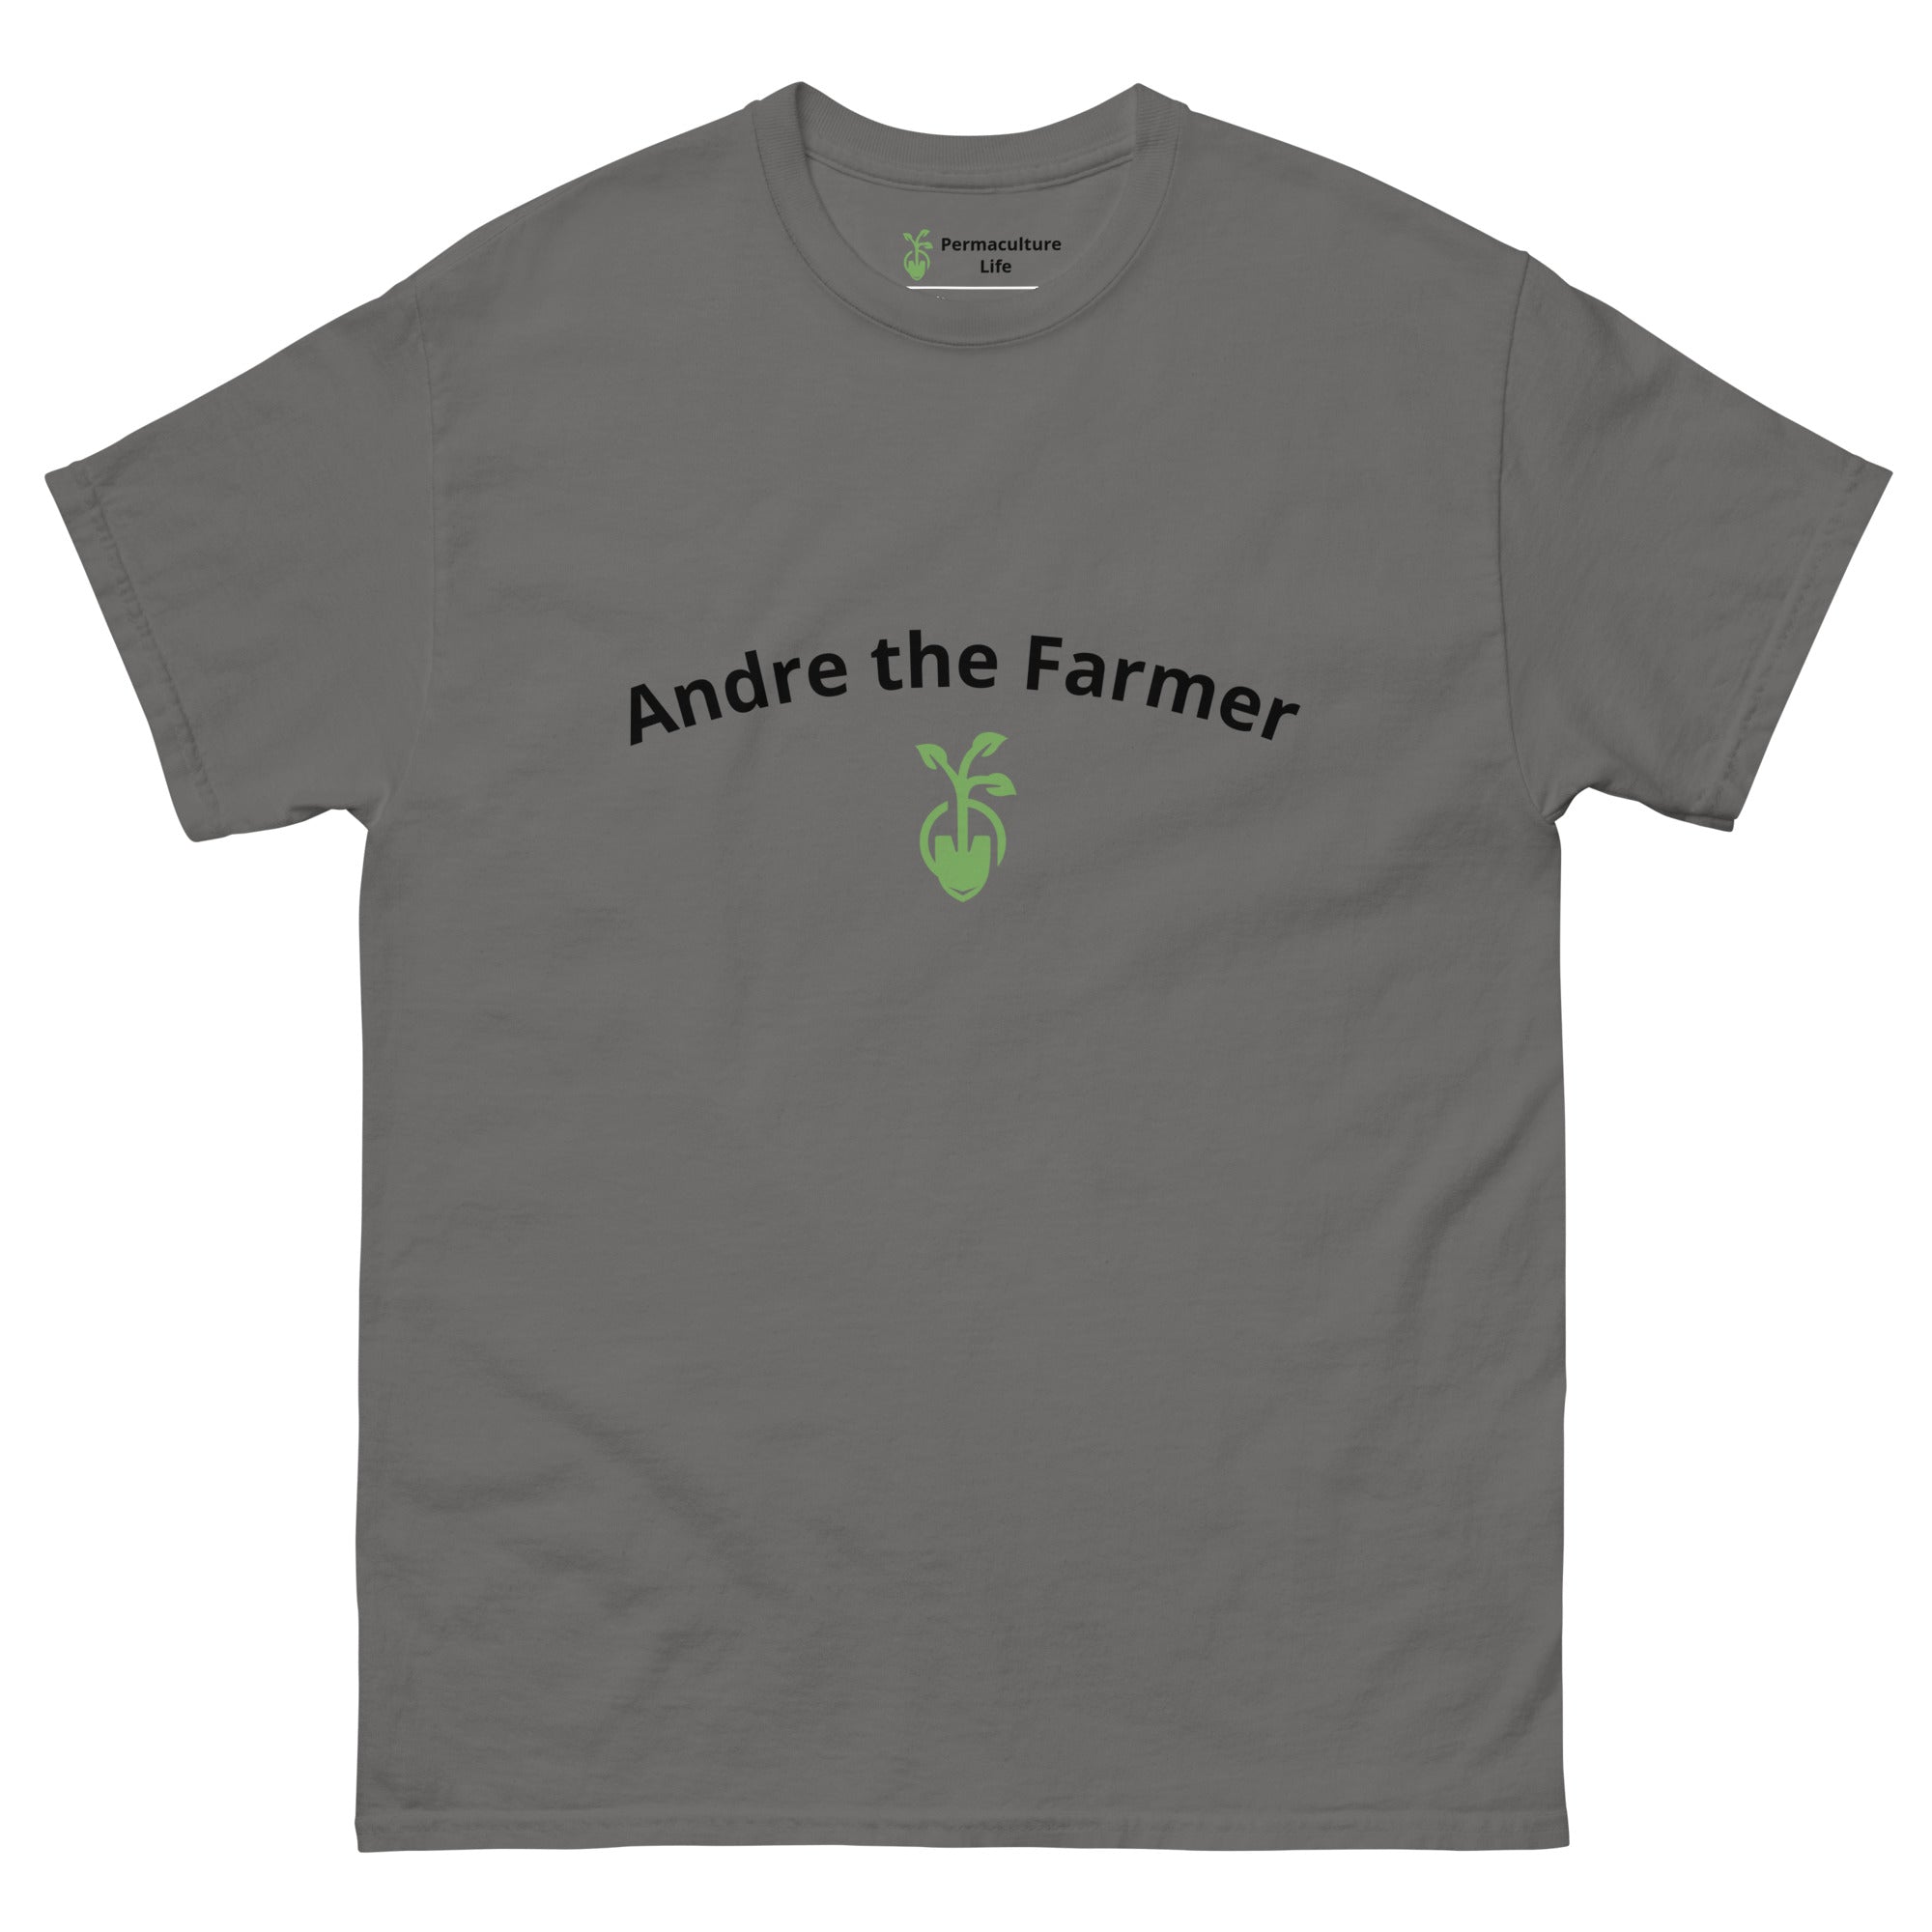 Andre the Farmer Men's classic tee